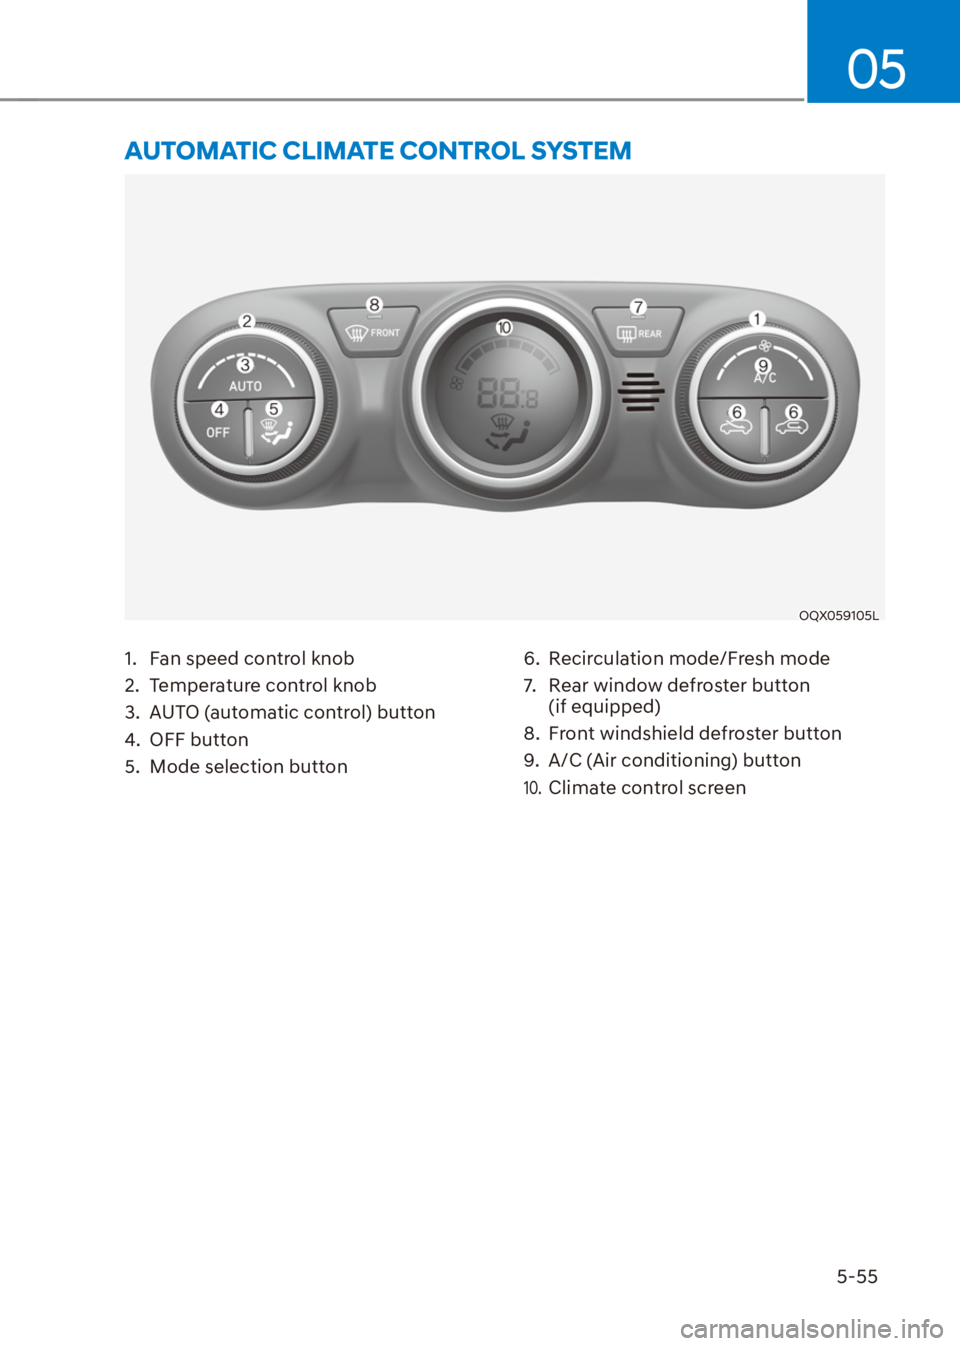 HYUNDAI VENUE 2021  Owners Manual 5-55
05
1.  Fan speed control knob
2.  Temperature control knob
3.  AUTO (automatic control) button
4. OFF button
5.  Mode selection button6.  Recirculation mode/Fresh mode
7.  Rear window defroster b